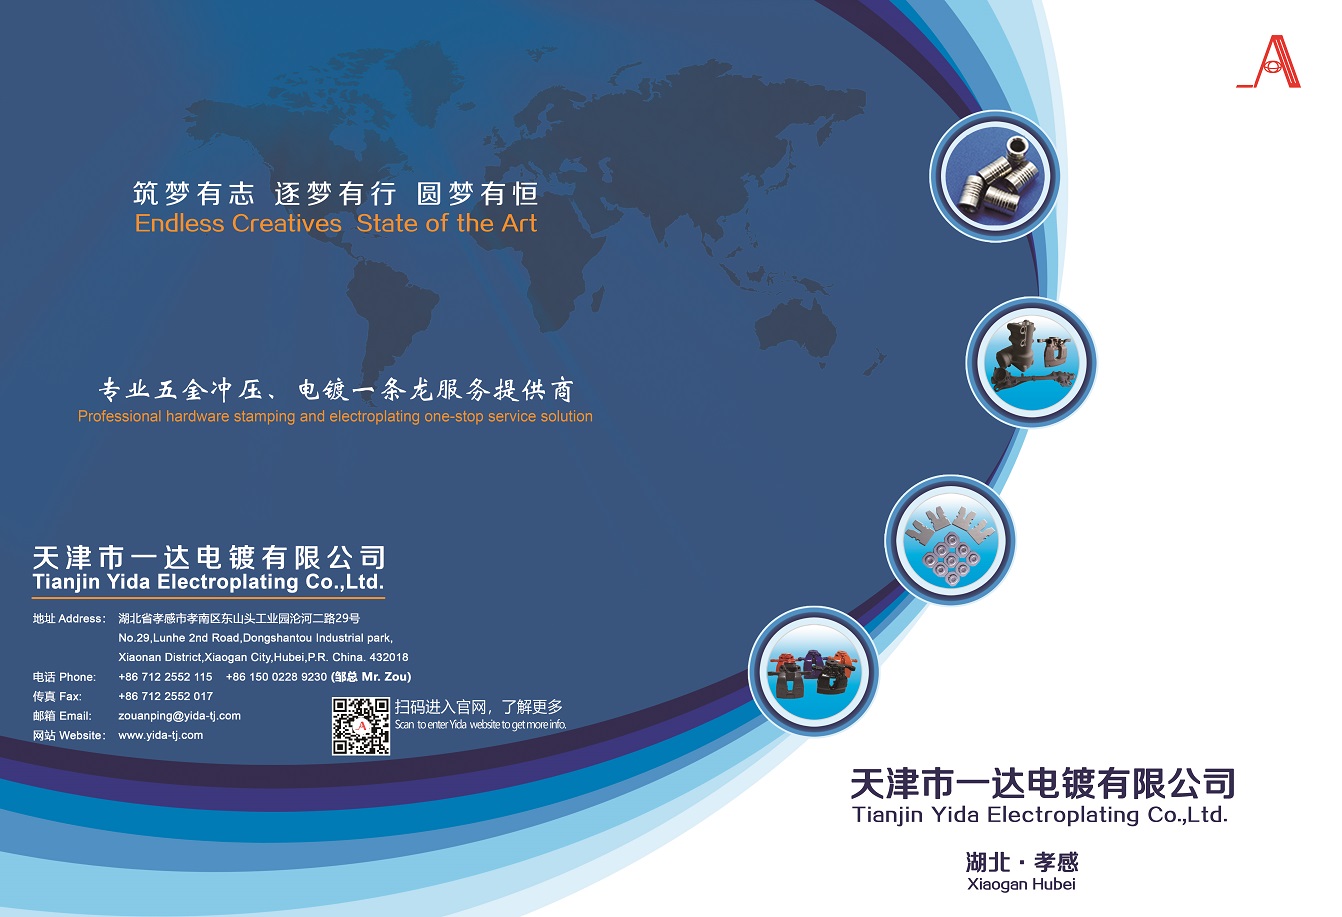 Electronic promotional album of Tianjin Yida Electroplating Co., Ltd.